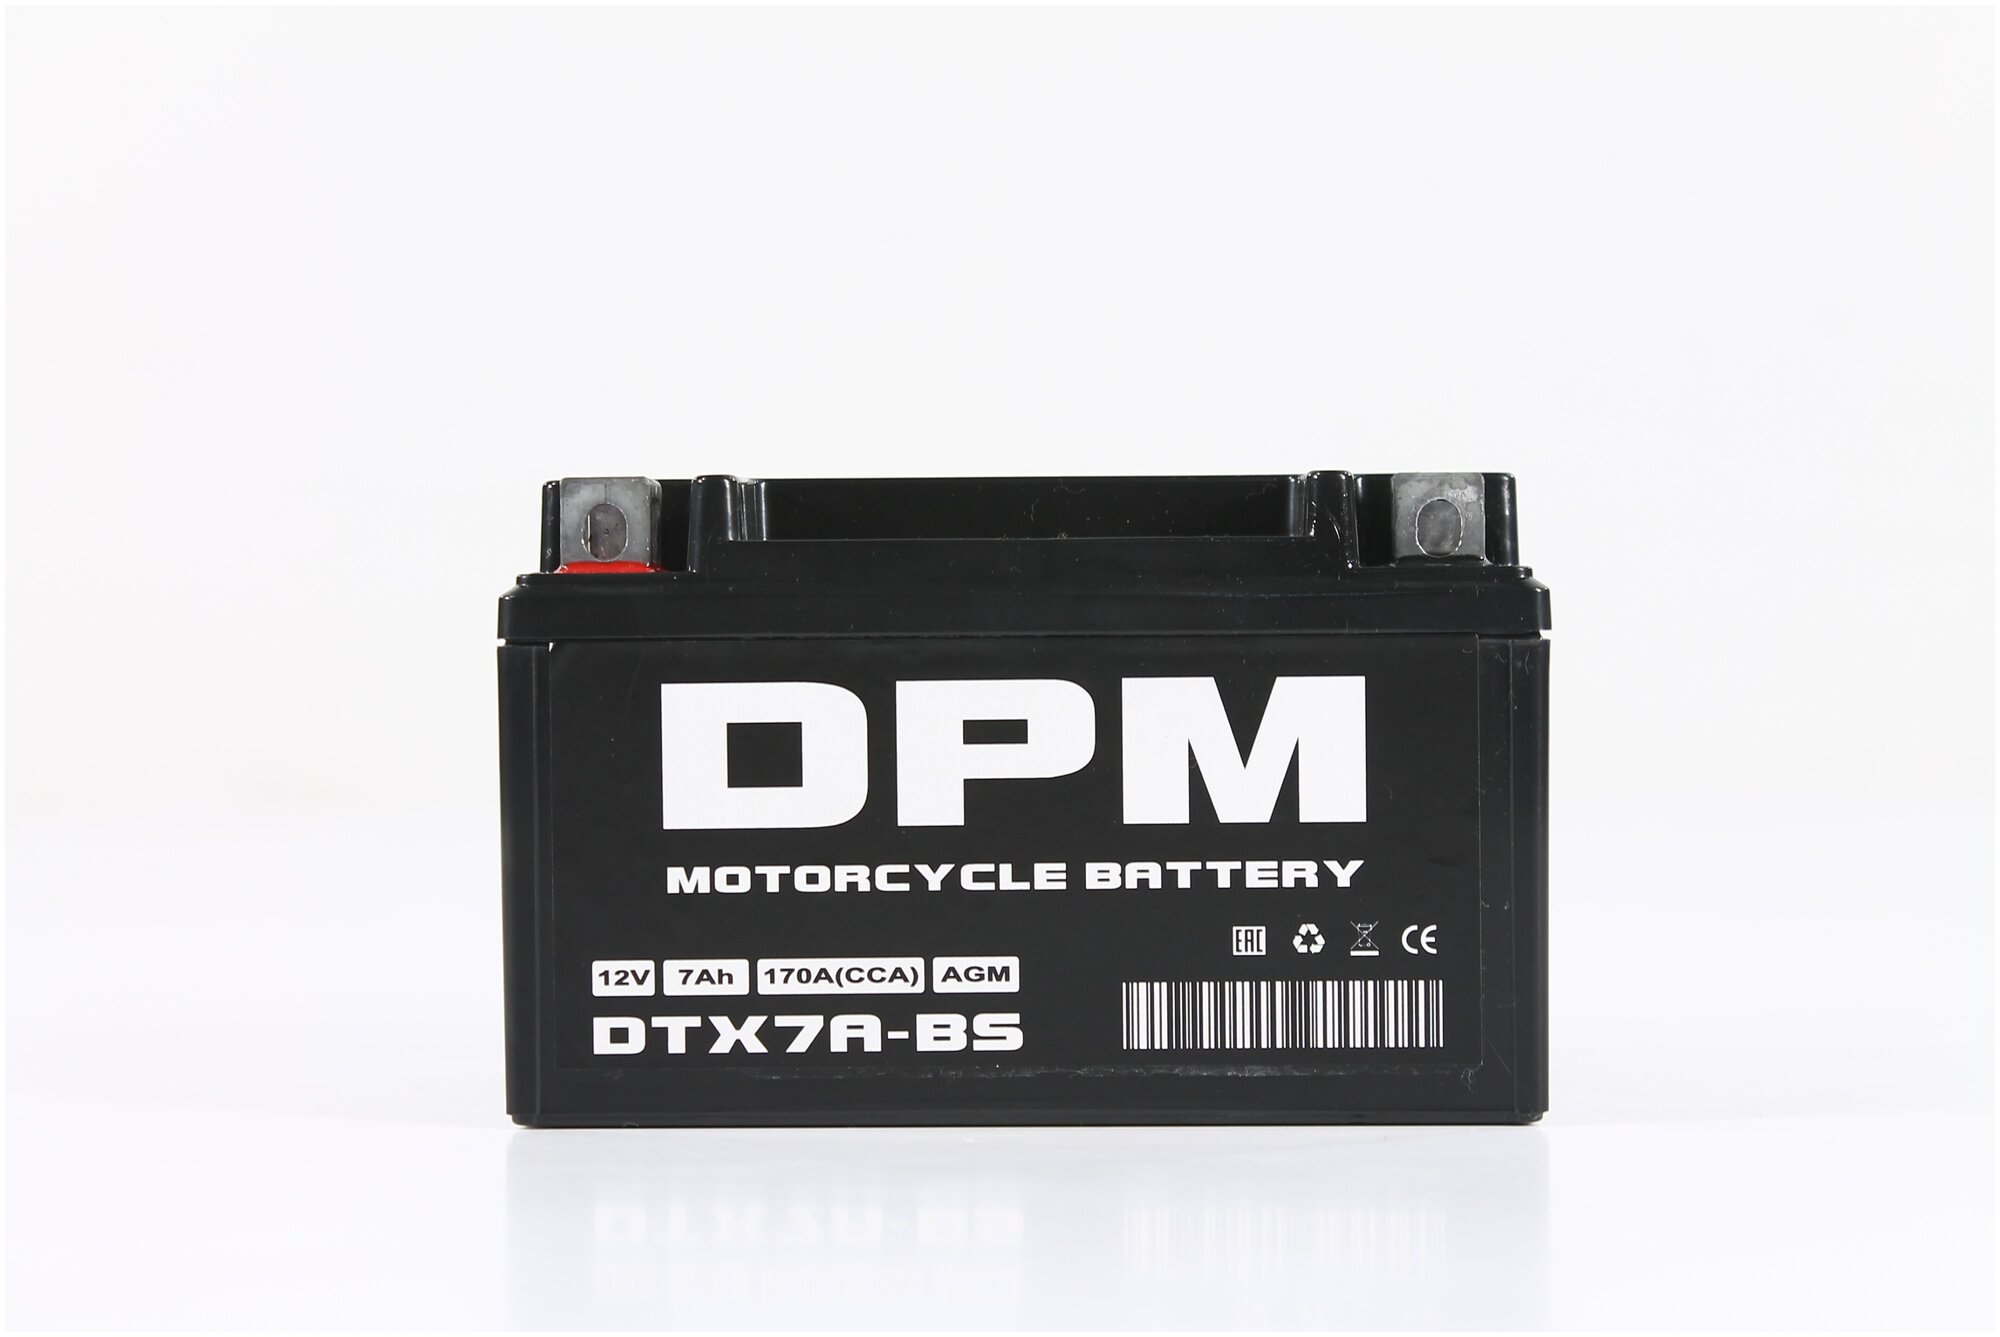 Мото Аккумулятор DPM 12В 7А/ч AGM (YTX7A-BS)Стартерный для мотоцикла, квадроцикла, скутера, мопеда